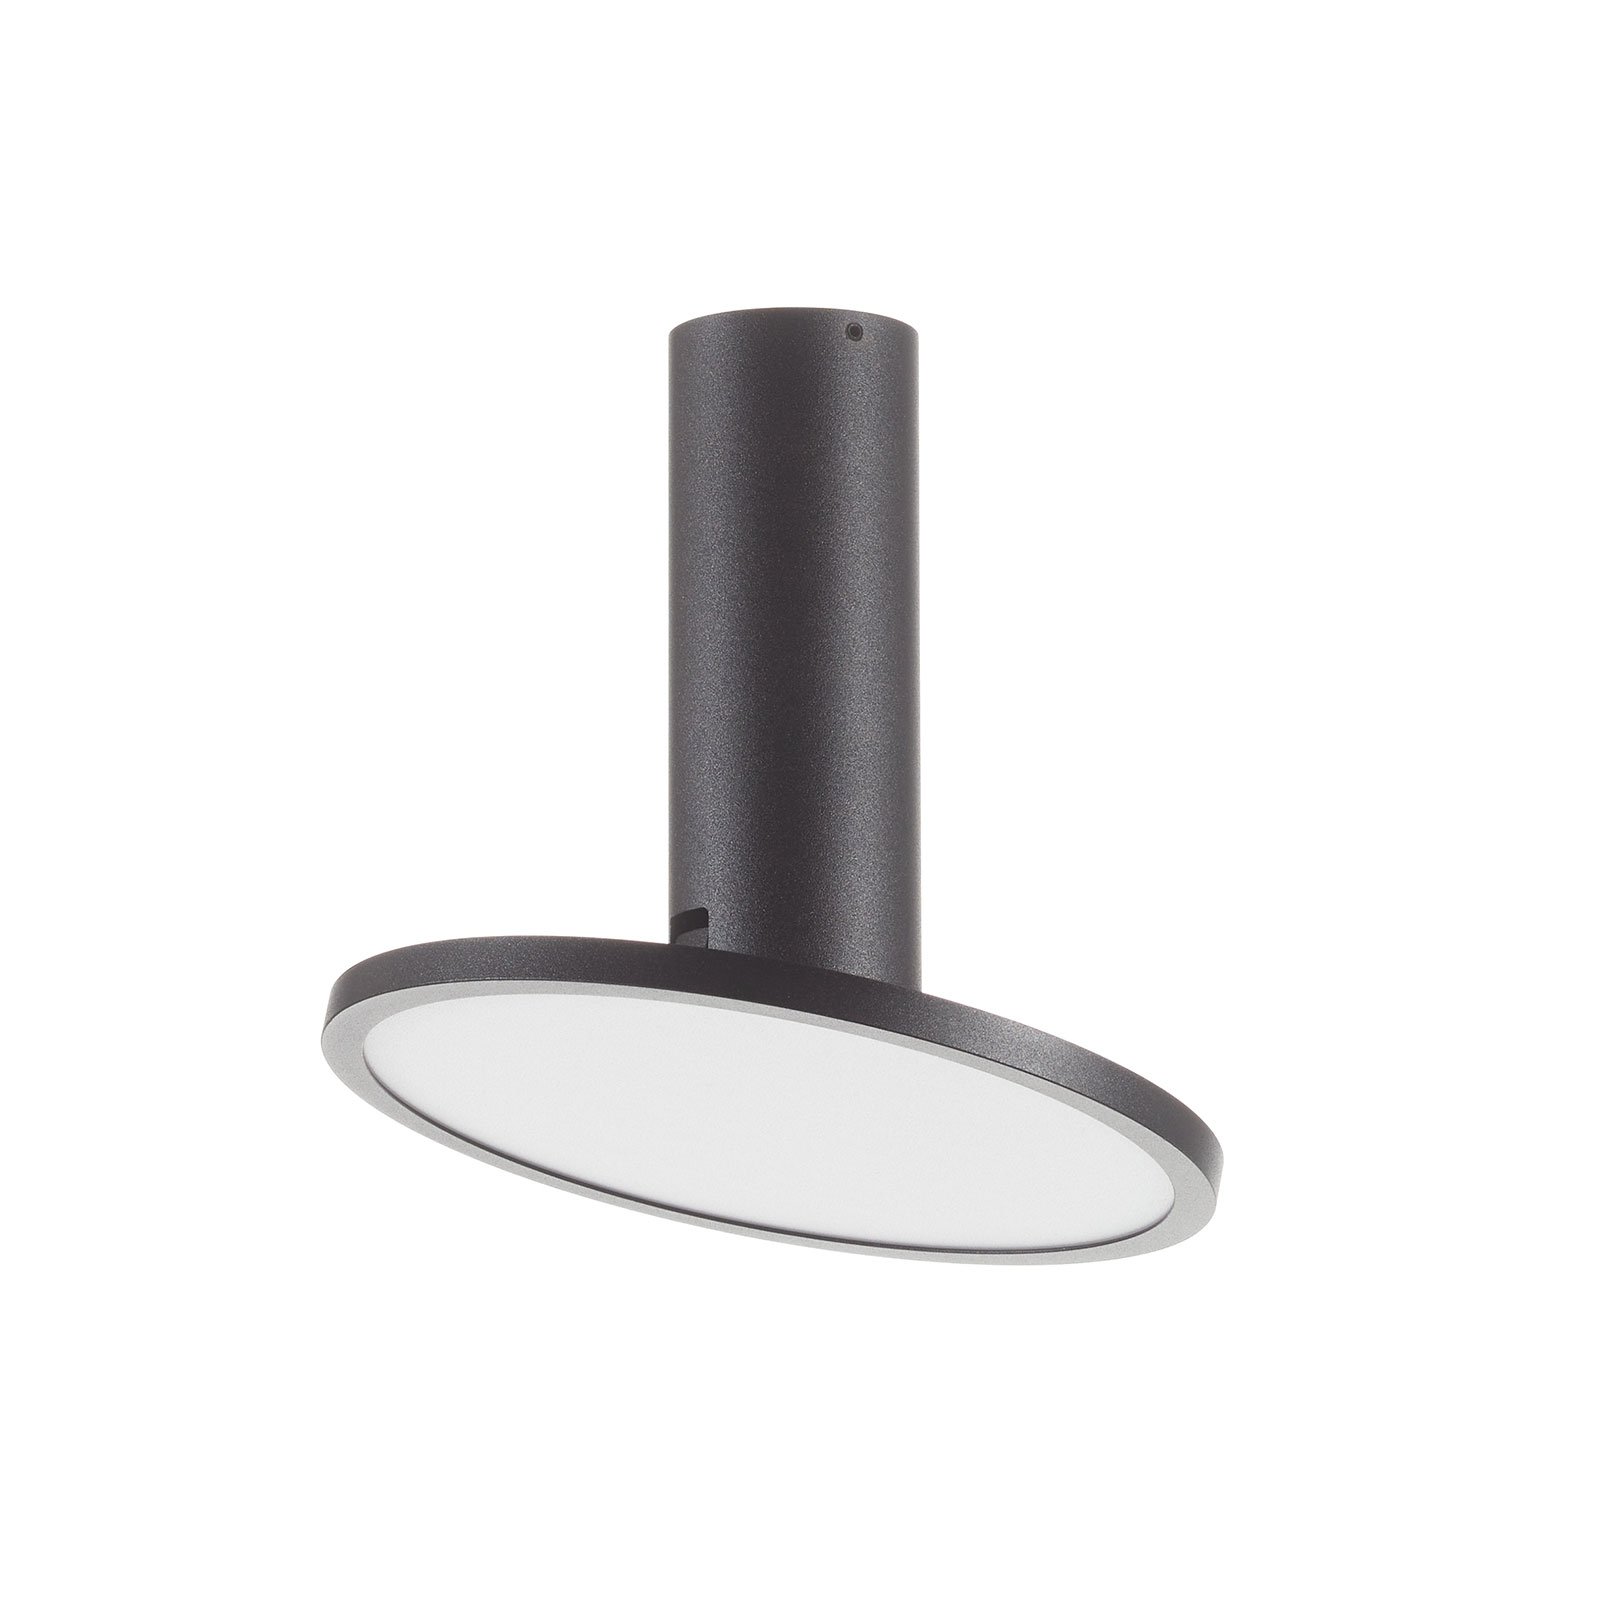 LED ceiling light Morgan, movable, black